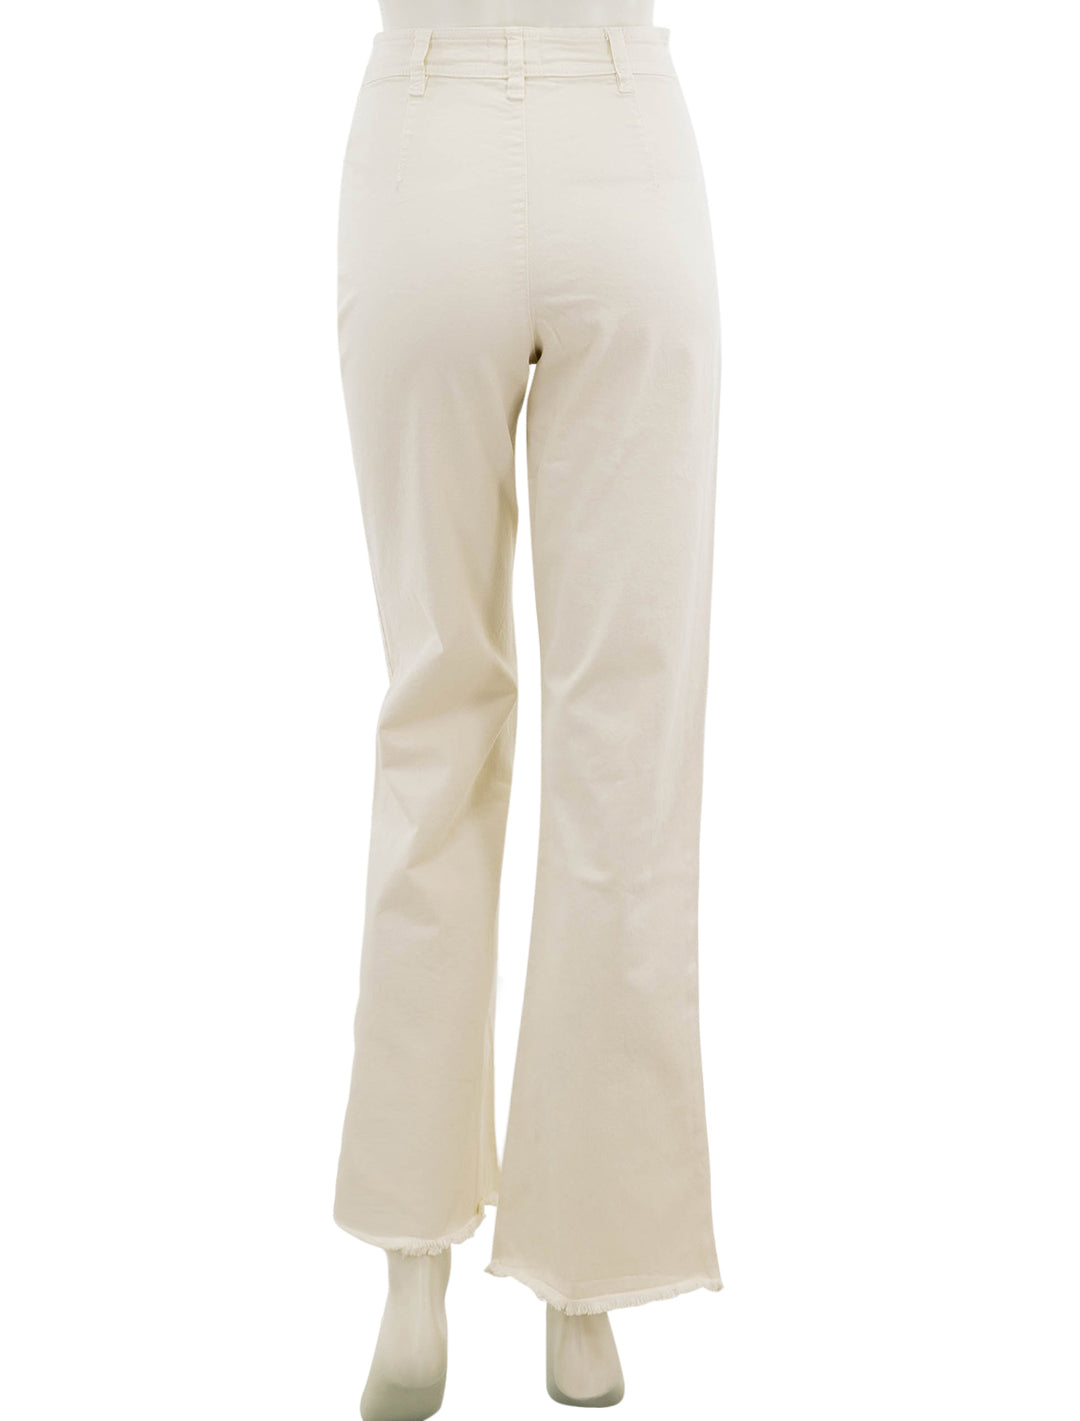 Back view of Marine Layer's bridget pant in cream with raw hem.